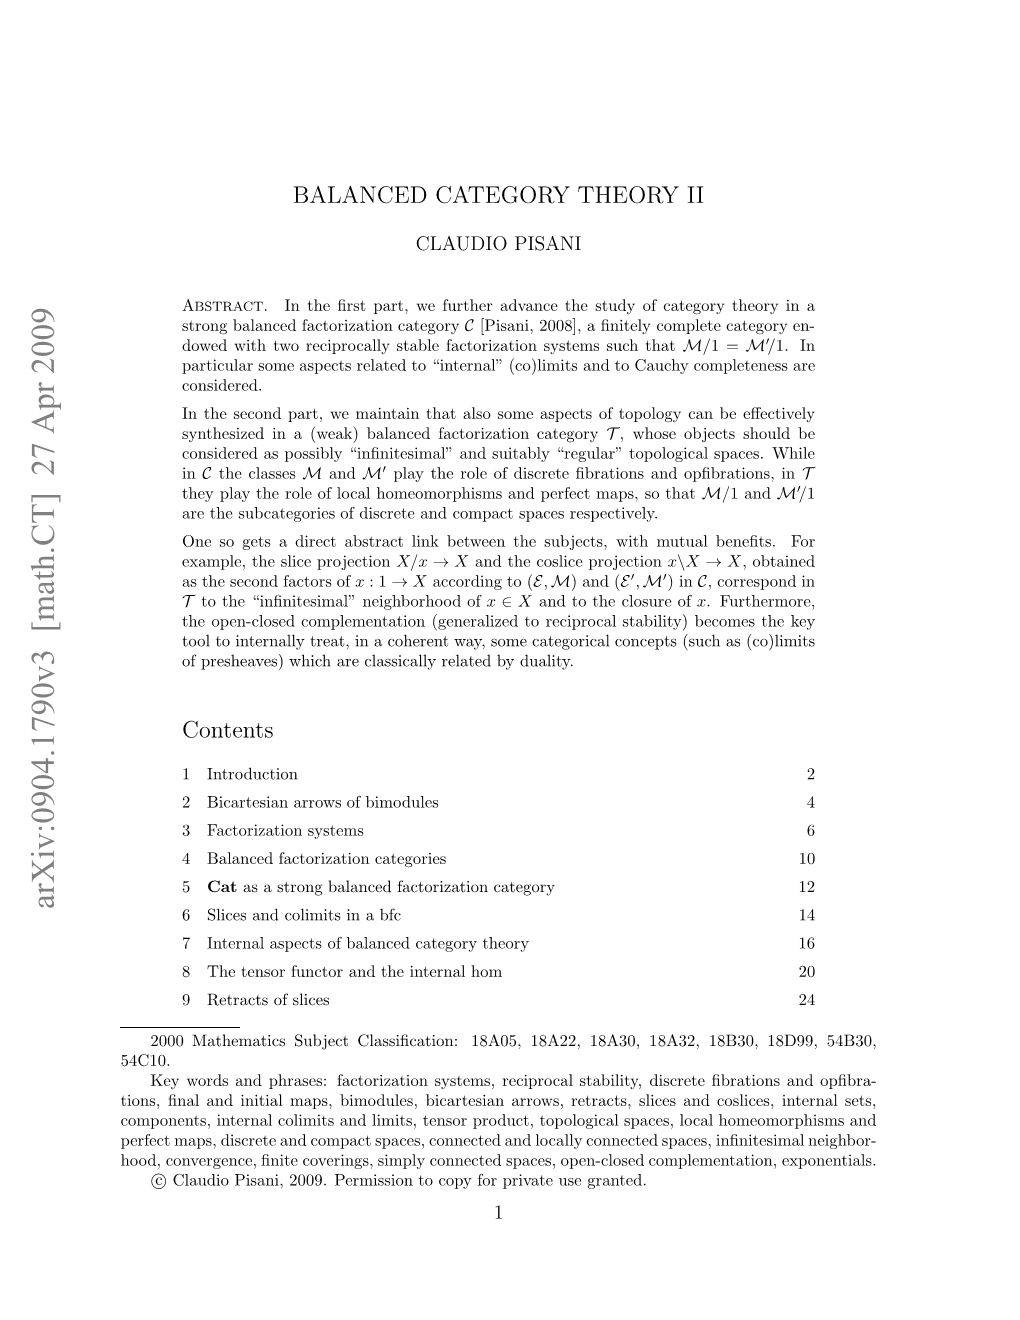 Balanced Category Theory II